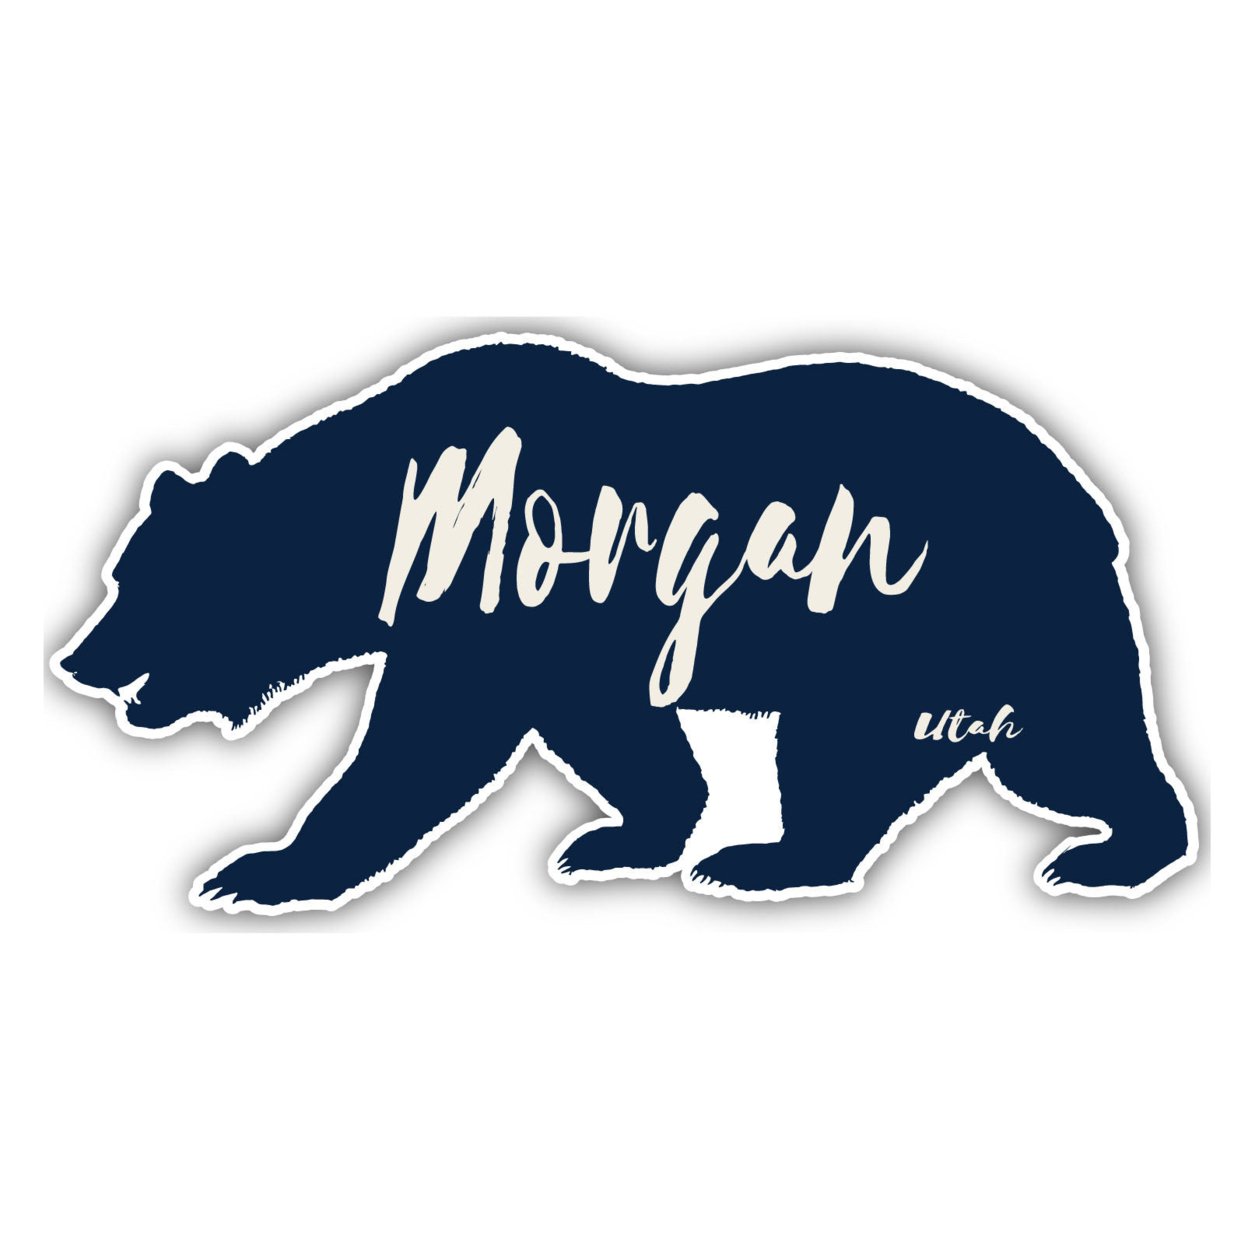 Morgan Utah Souvenir Decorative Stickers (Choose Theme And Size) - Single Unit, 4-Inch, Bear